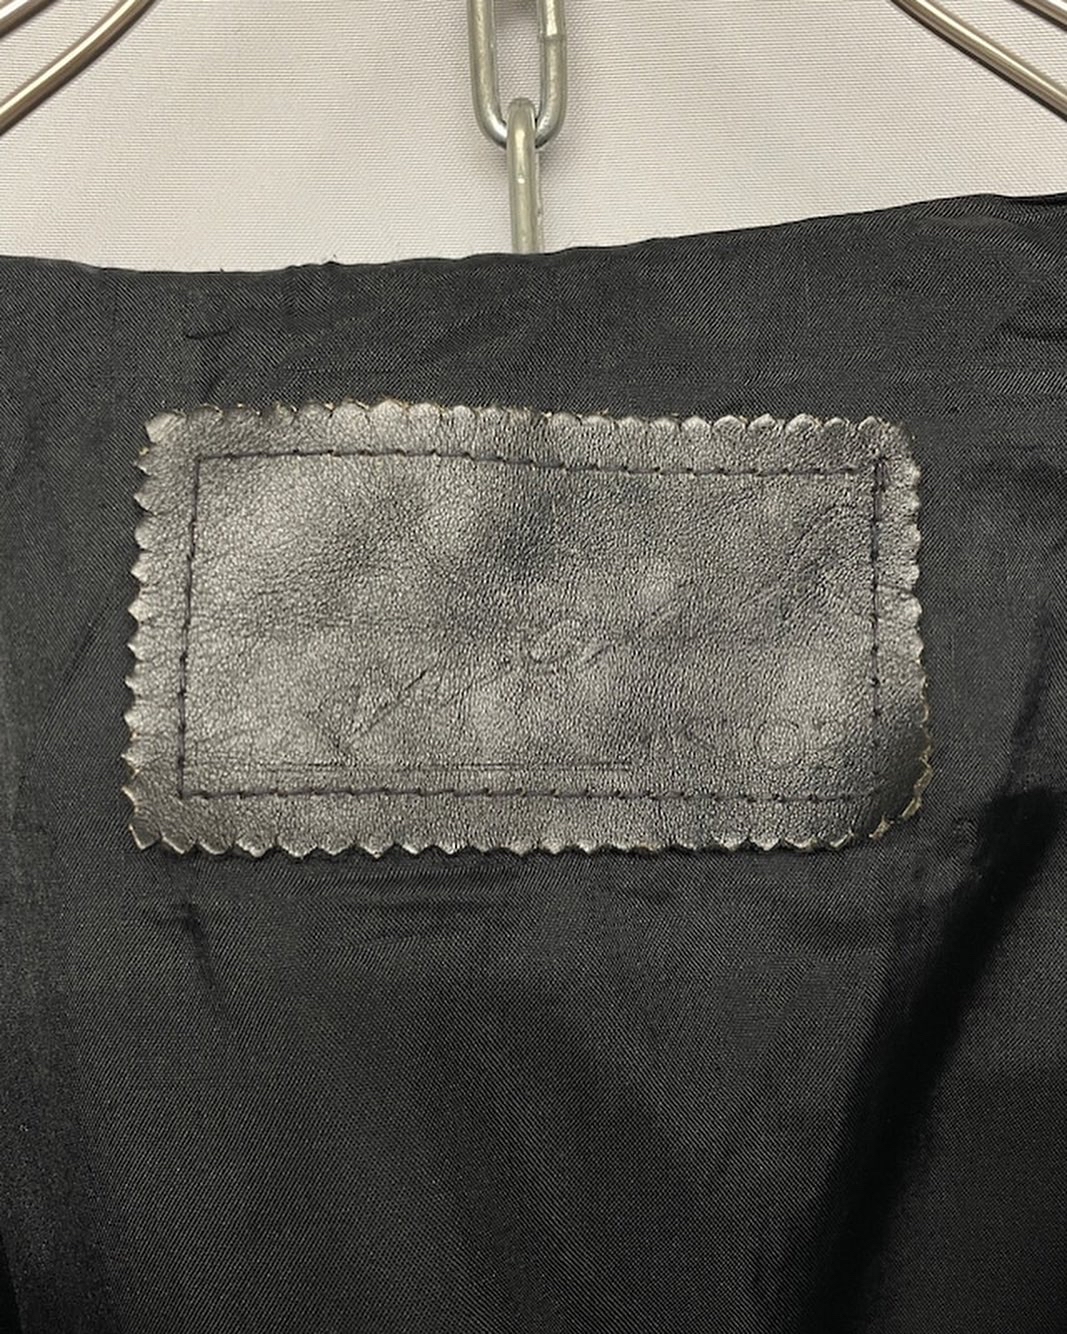 “OLD” MA-1 Type Leather Jacket